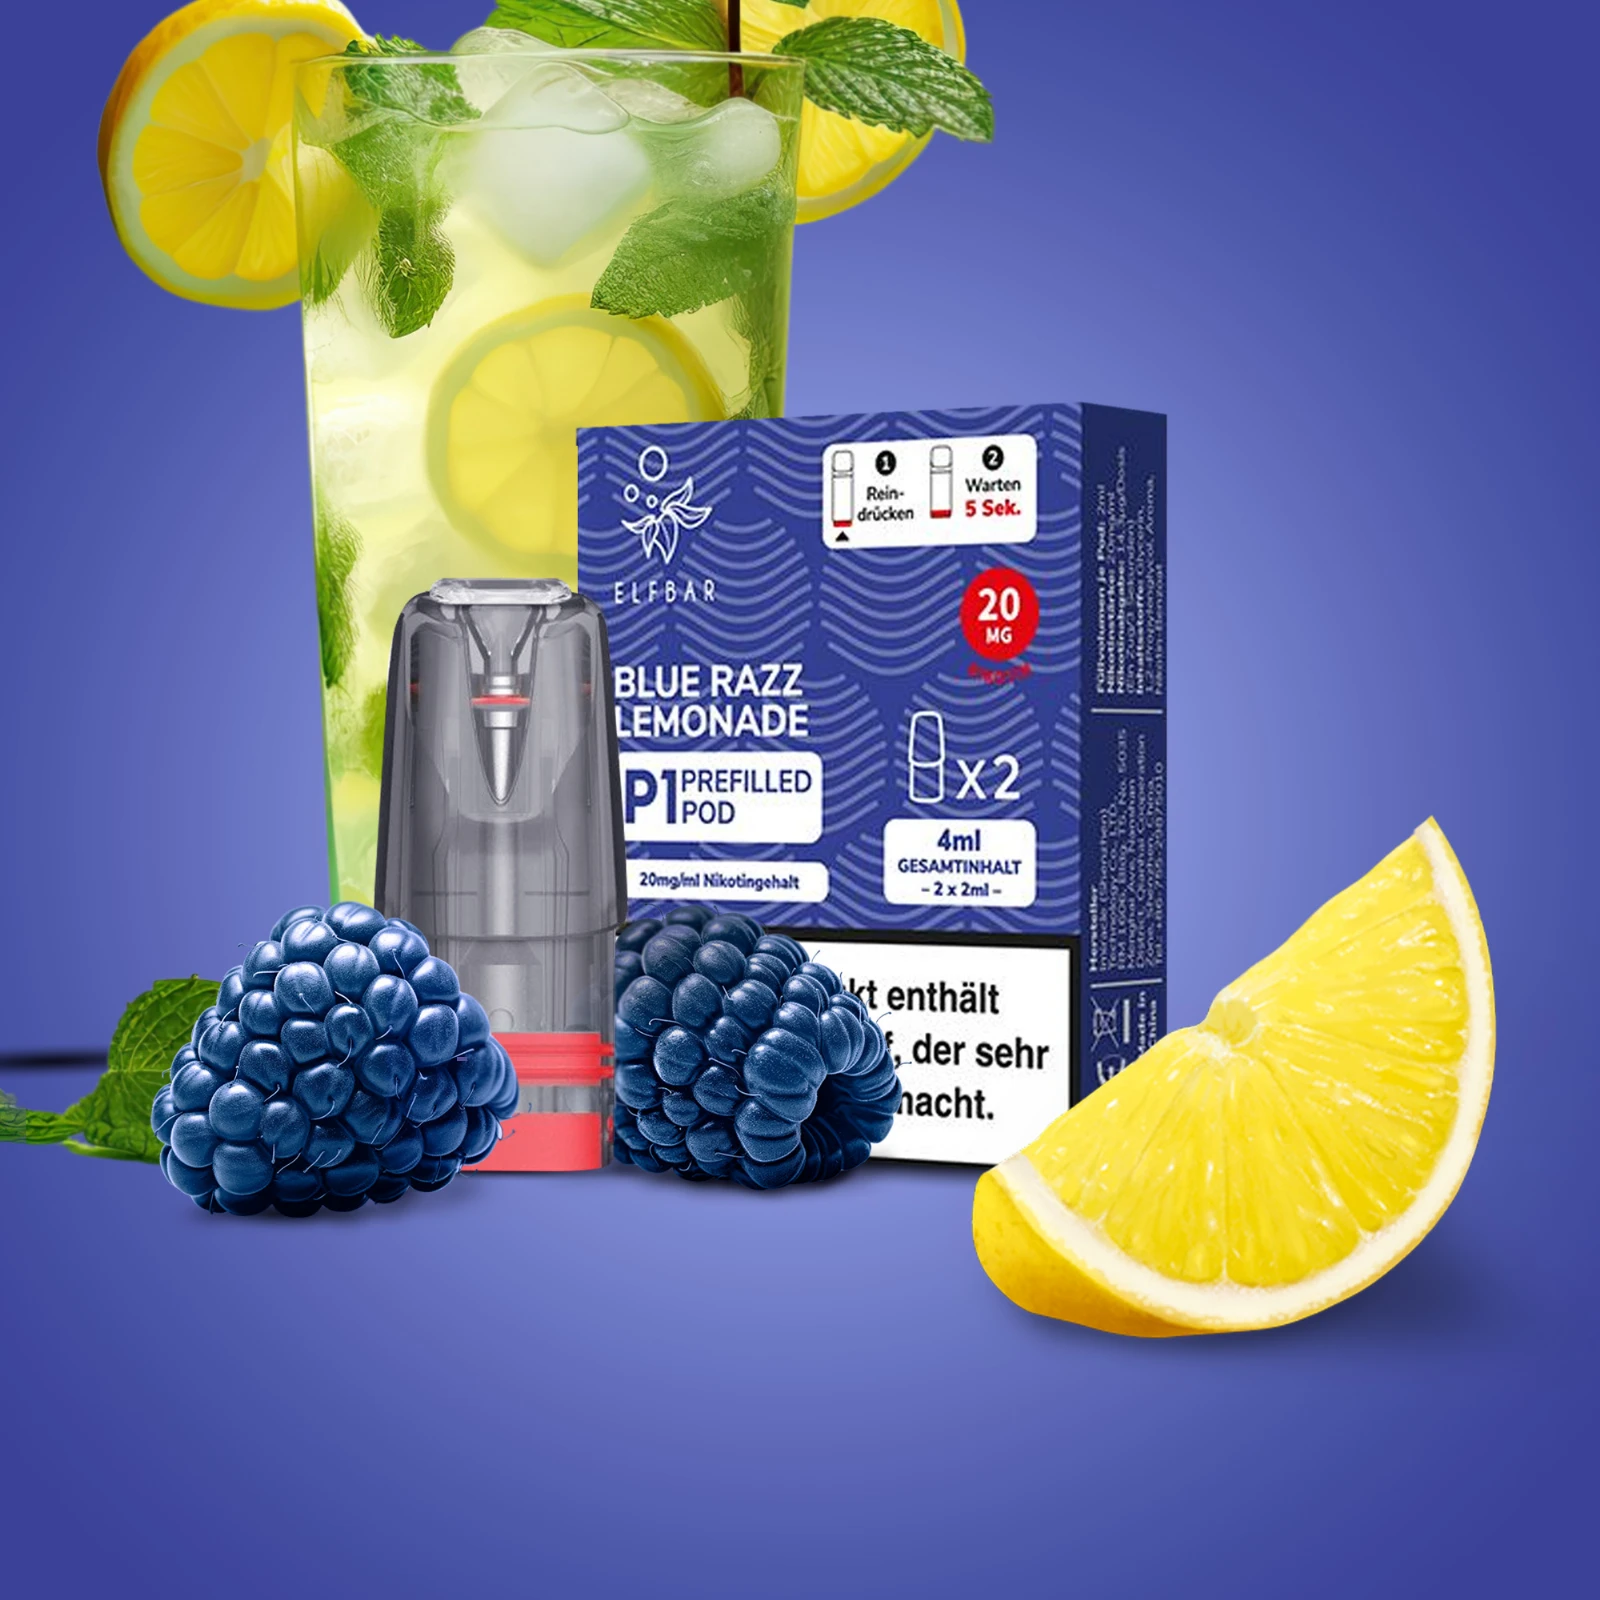 Elf Bar Mate500 P1 Blue Razz Lemonade Pod | Online bestellen 1